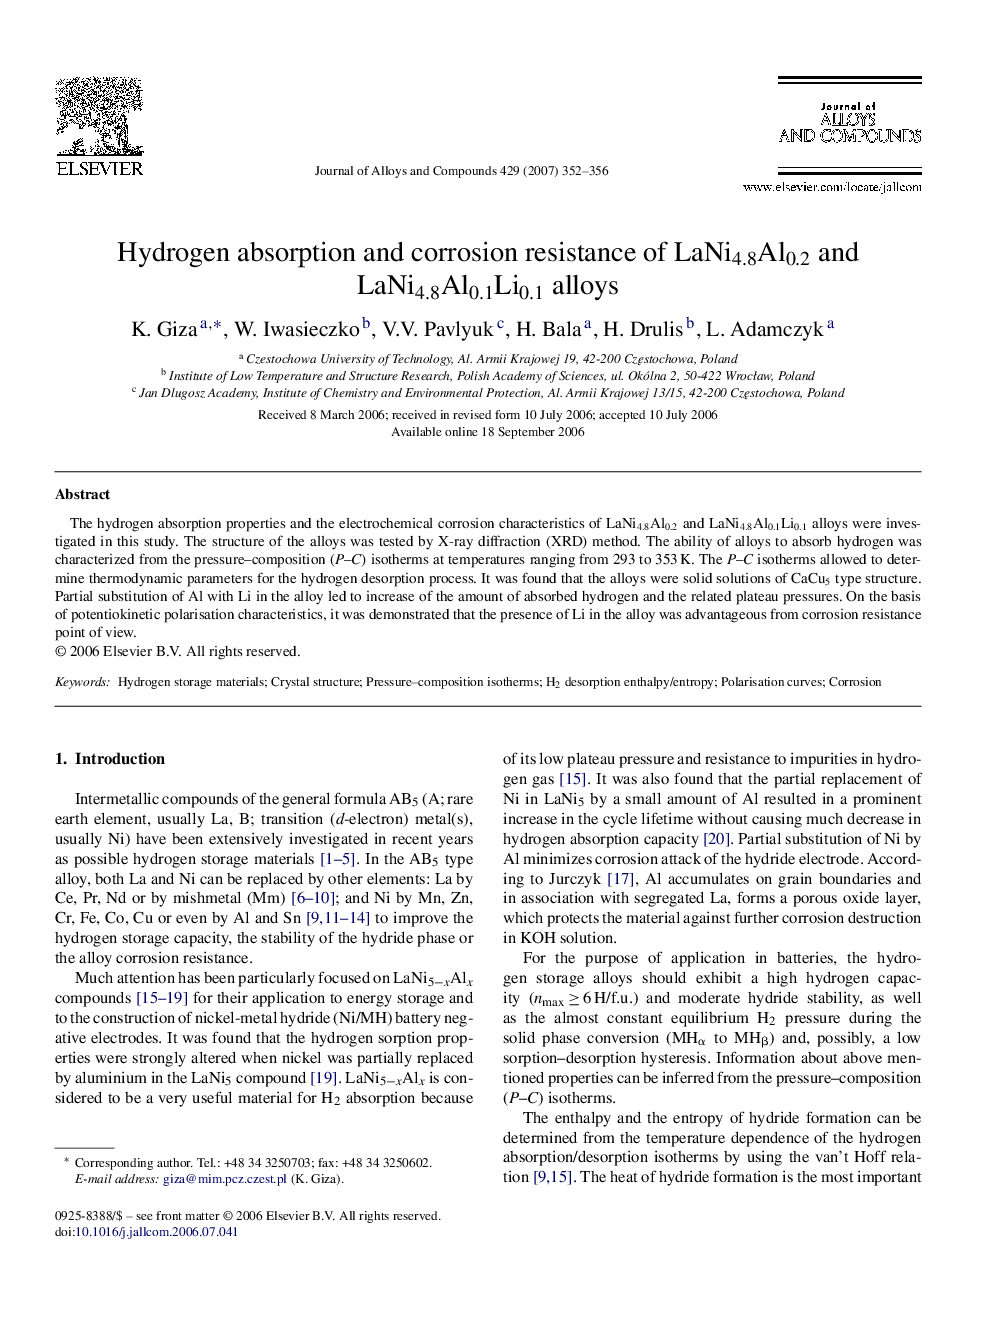 Hydrogen absorption and corrosion resistance of LaNi4.8Al0.2 and LaNi4.8Al0.1Li0.1 alloys